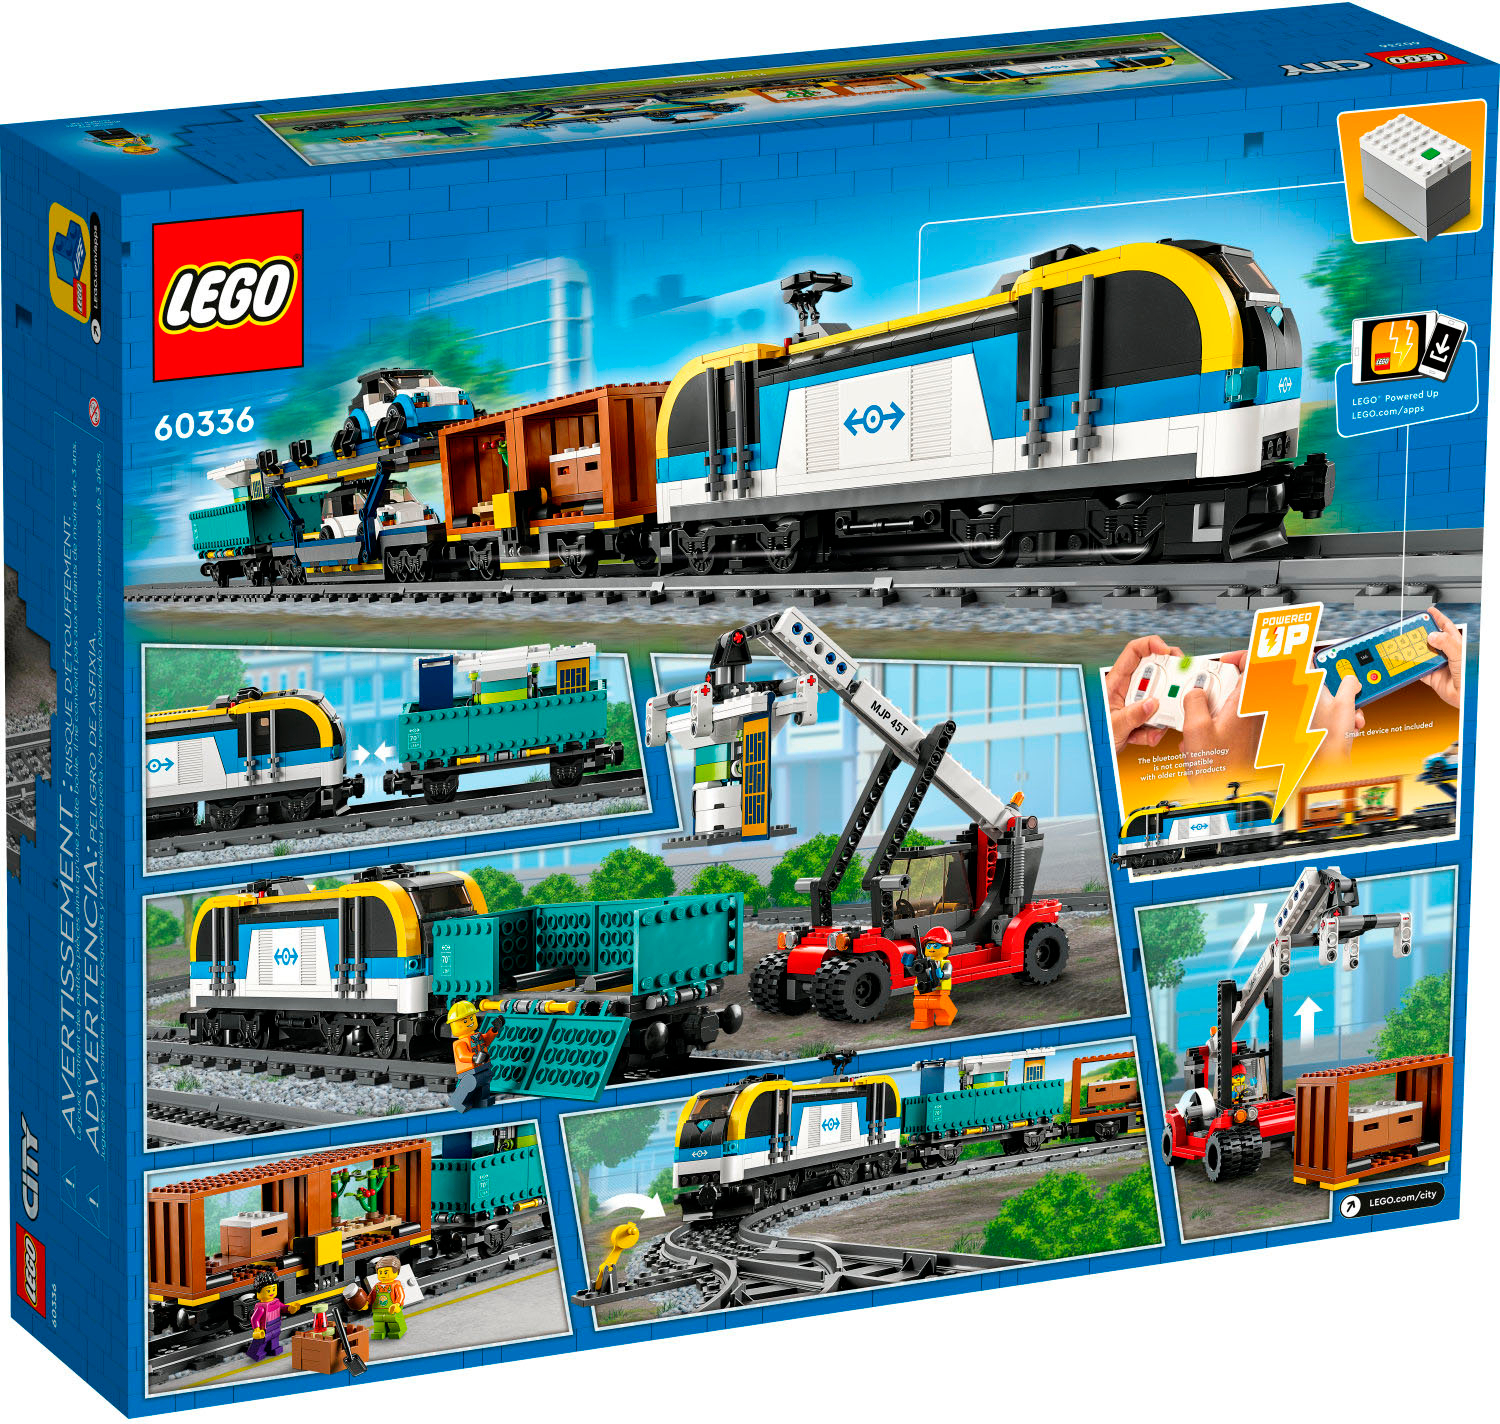 LEGO City Freight 60336 6385809 - Buy